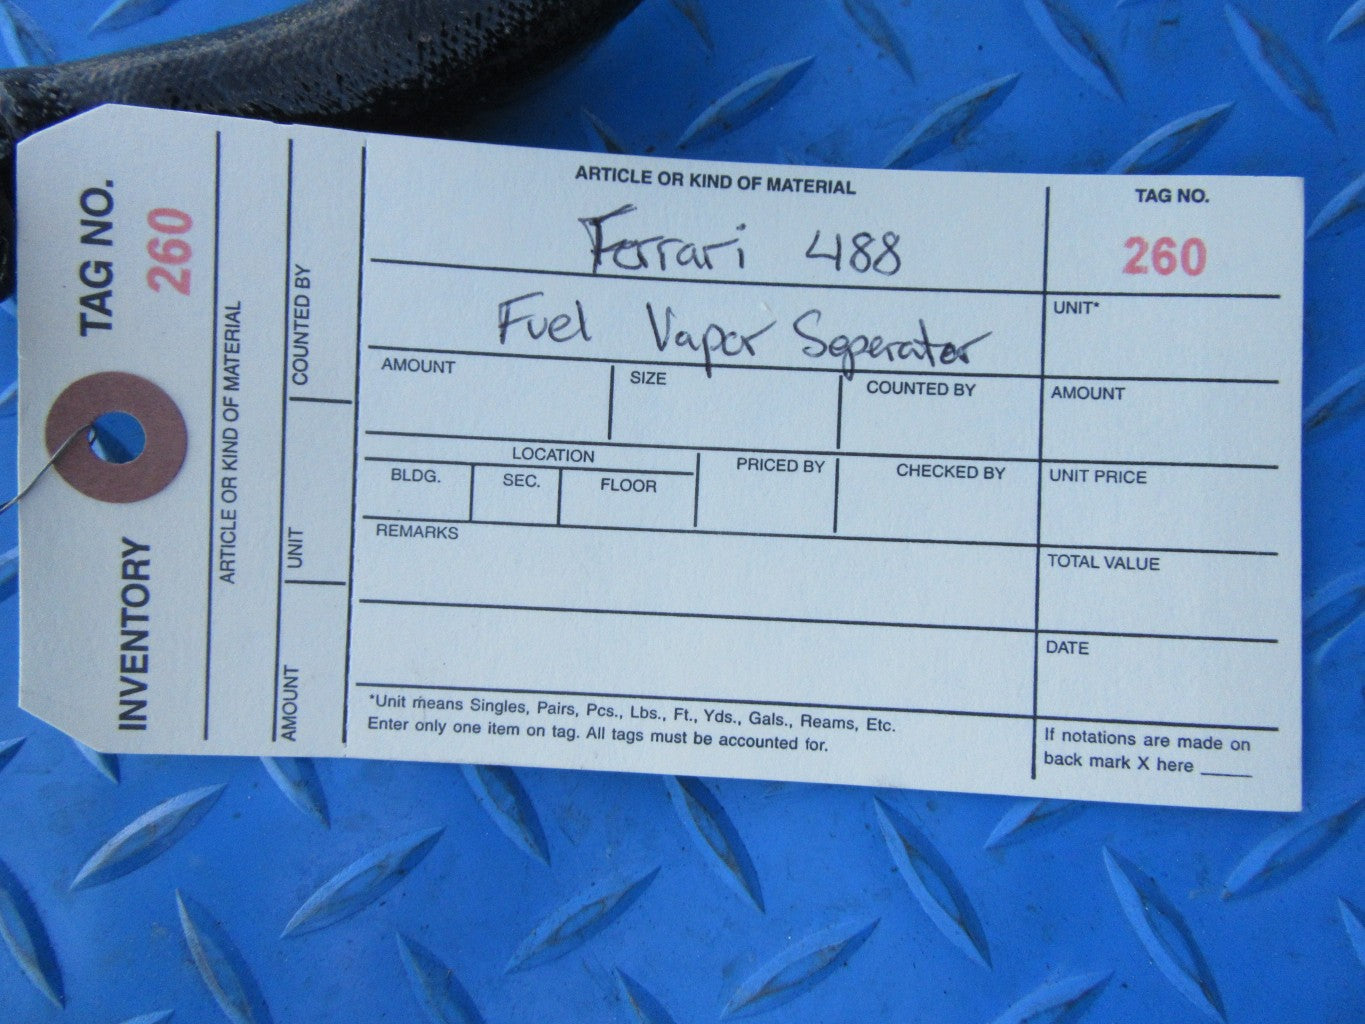 Ferrari 488 GTB Spider fuel vapour vapor separator #0260